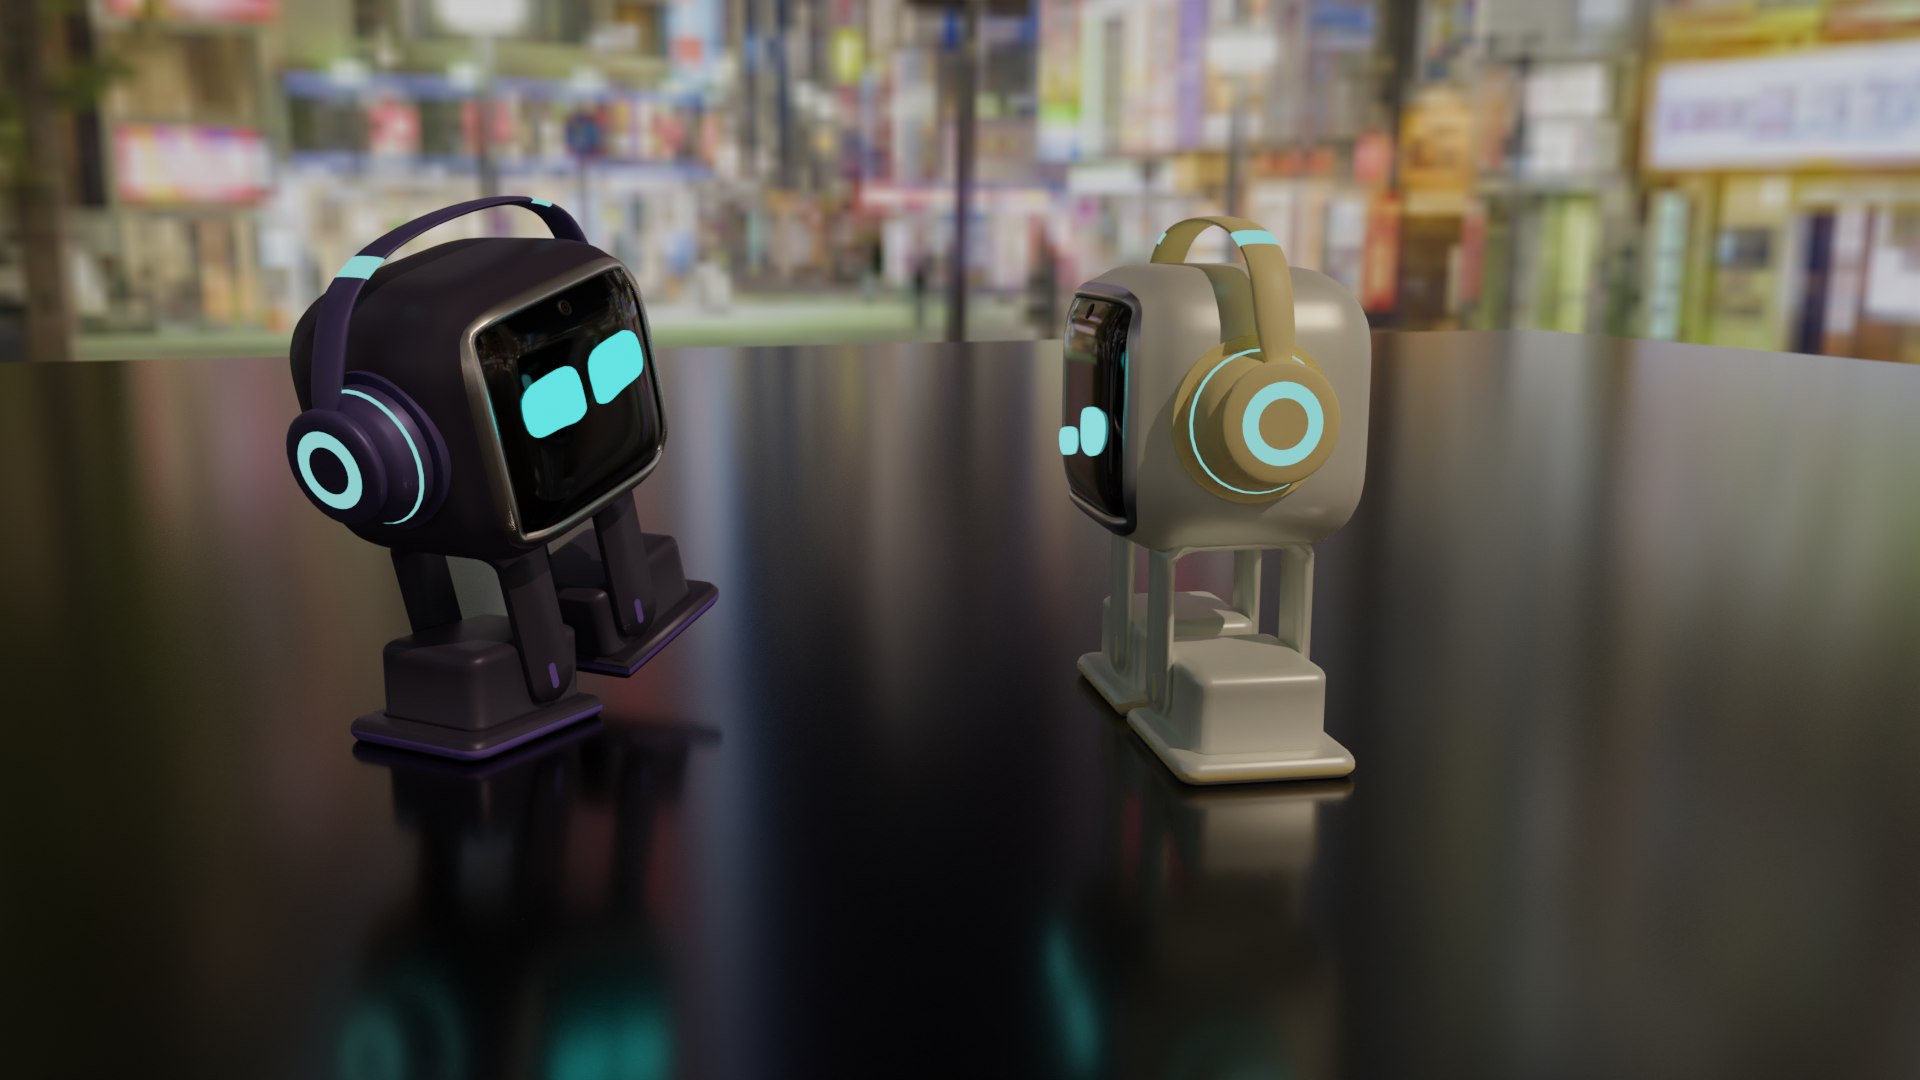 NEW ARRIVAL! EMO A.I Desktop Pet - Smart robot pet - friendly - lovely robot  